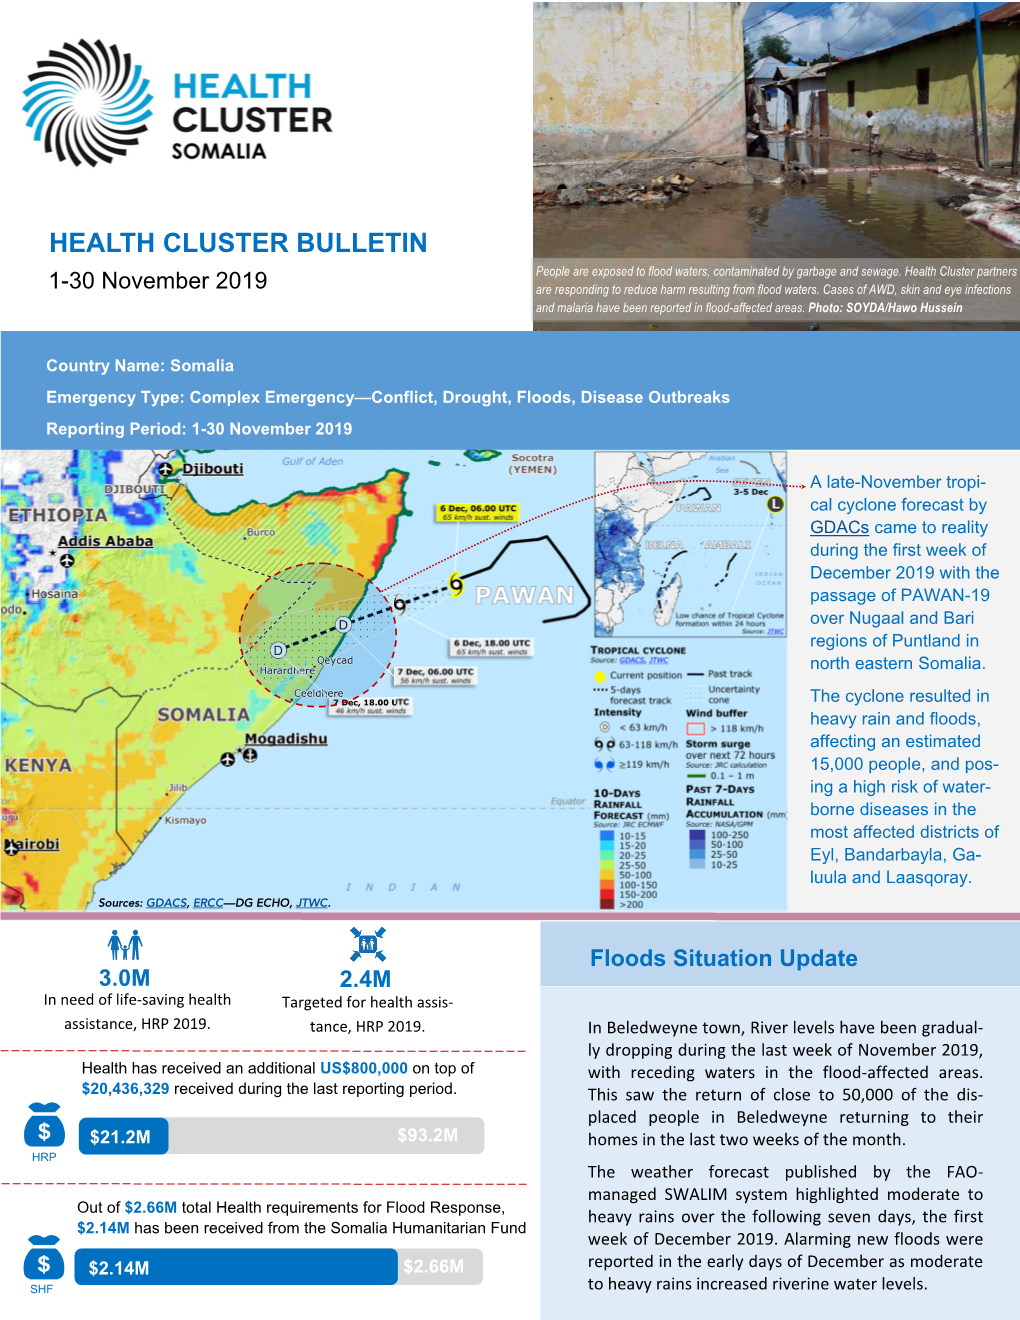 Somalia Health Cluster Bulletin, November 2019.Pub